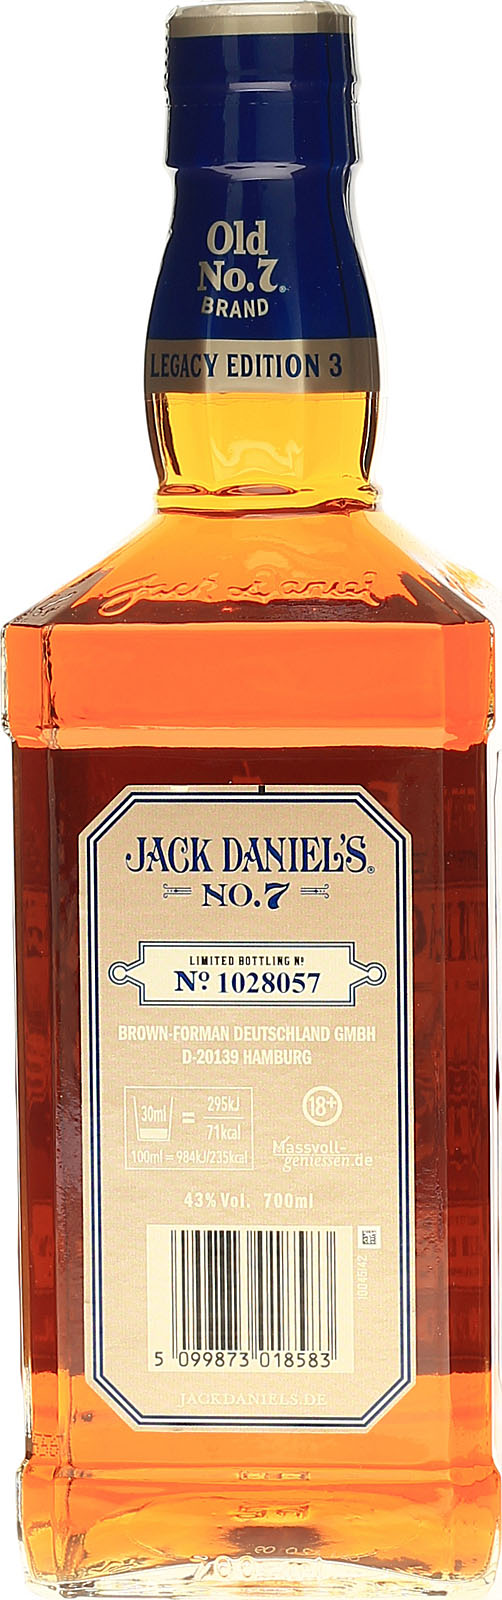 Jack Daniels Legacy Edition 3, Sonderabfüllung